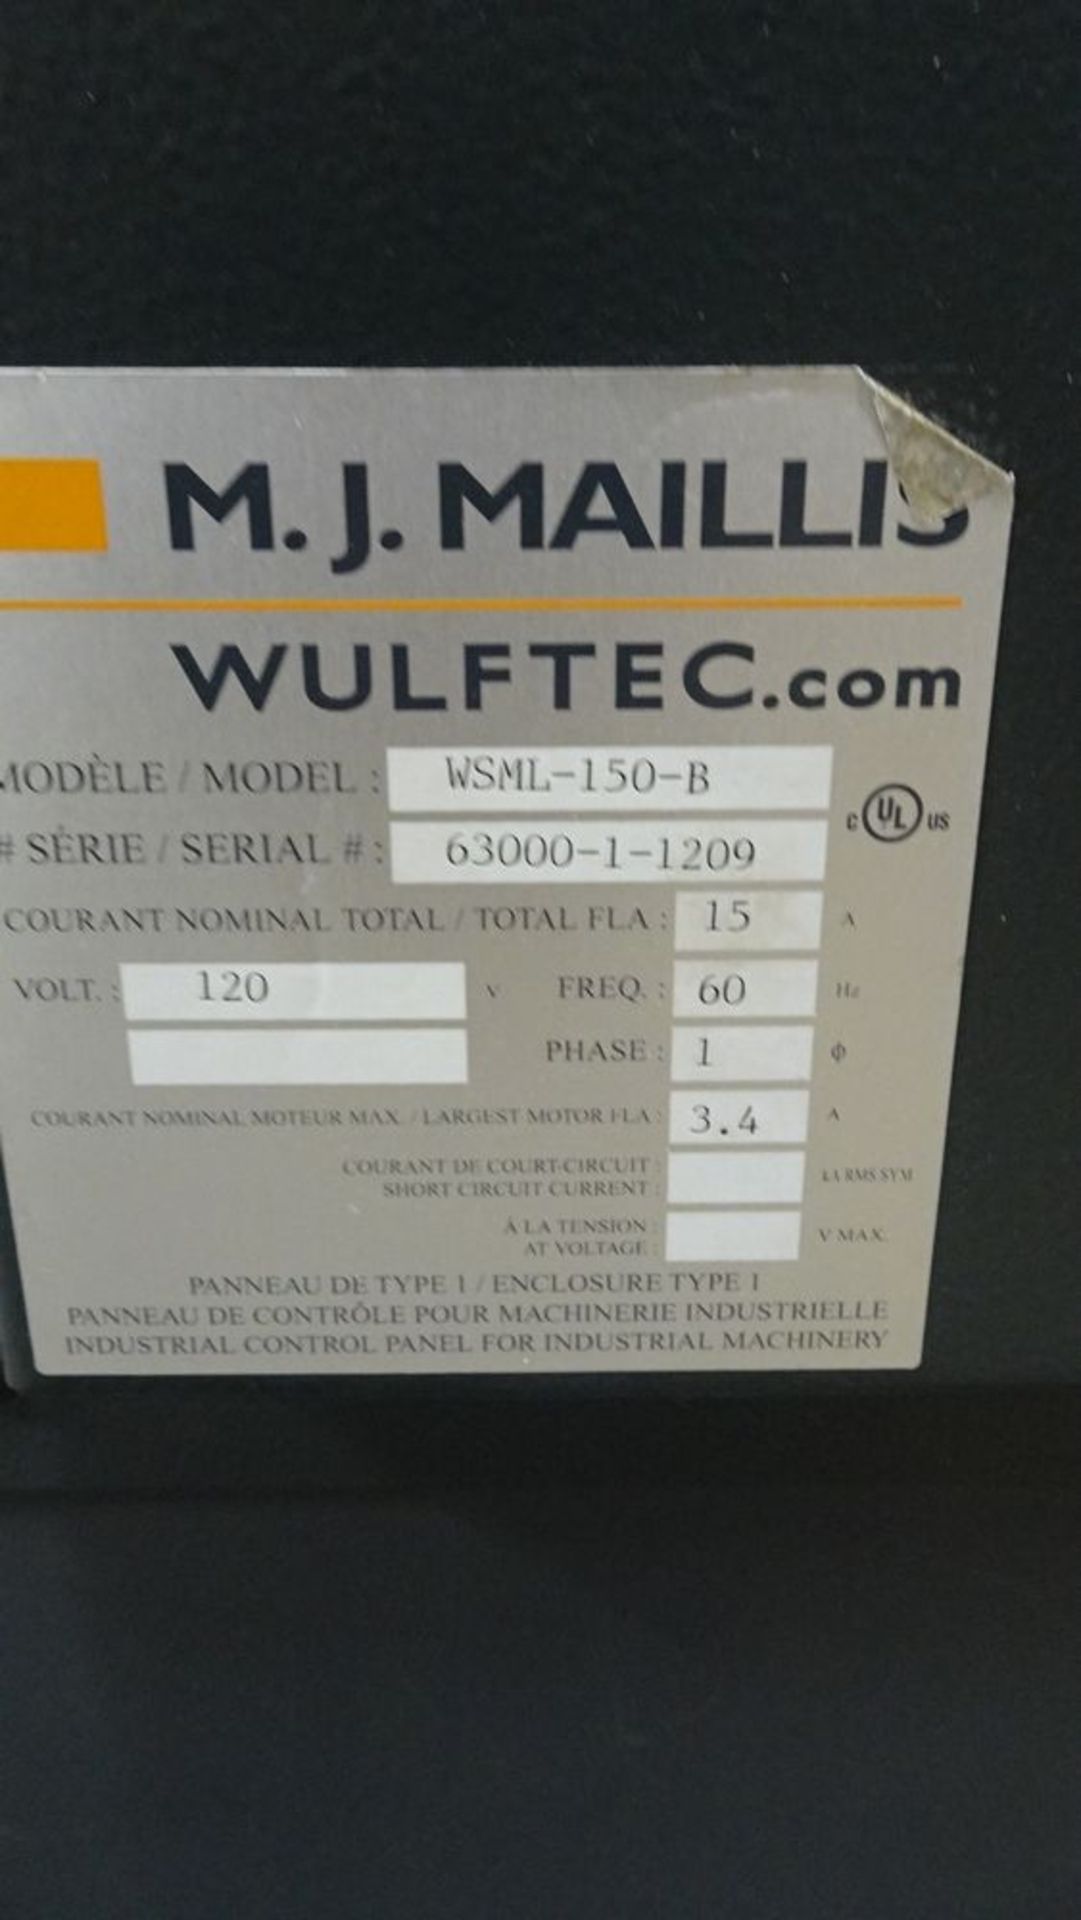 WULFTEC MJ MALLIS SMART AUTO PALLET WRAPPING MACHINE MODEL WSML-150-B, S/N 63000-1-1209 C/W - Image 4 of 6